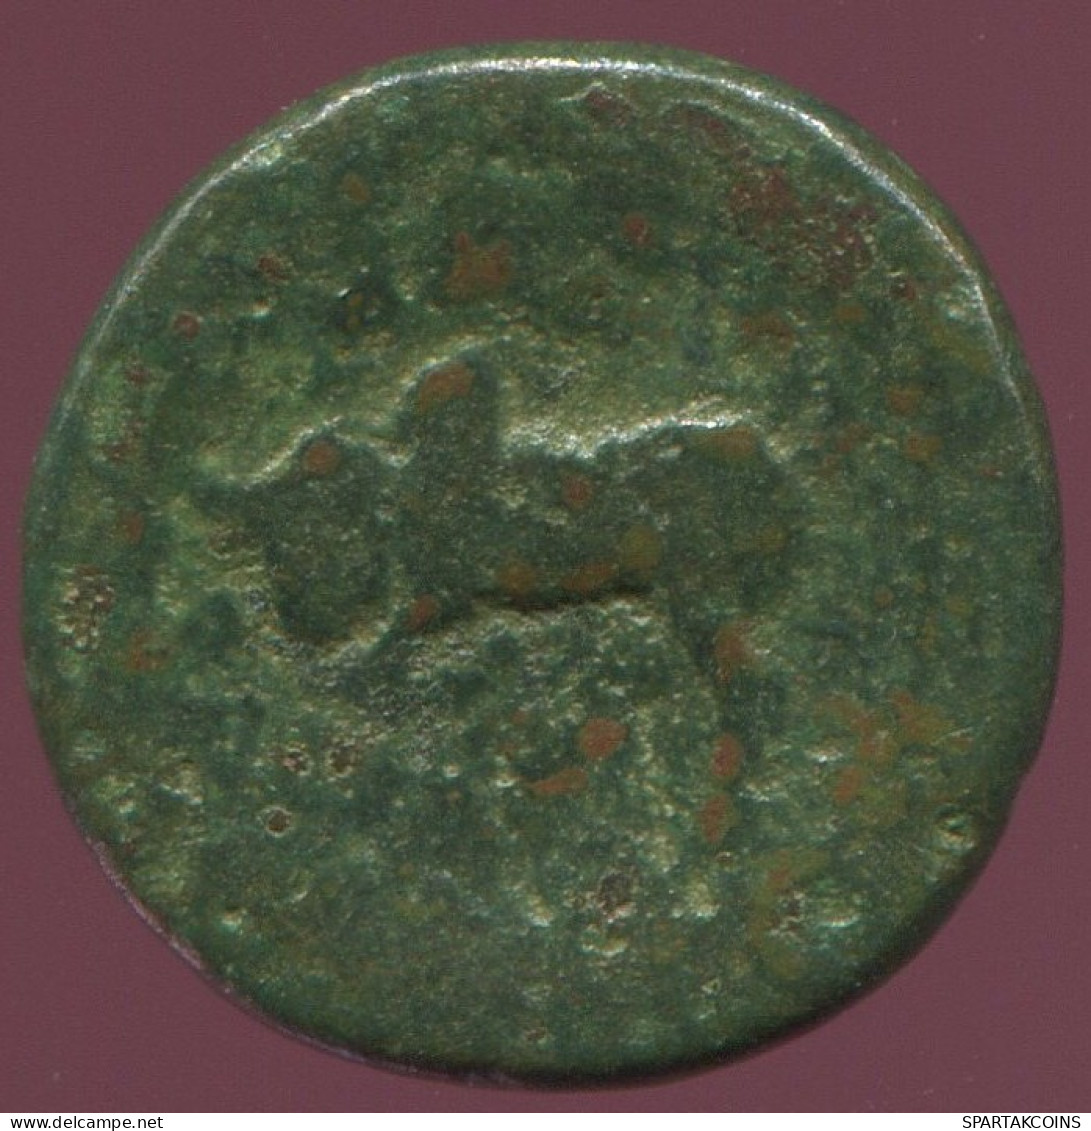 BULL Antike Authentische Original GRIECHISCHE Münze 2.2g/14mm #ANT1457.9.D.A - Grecques